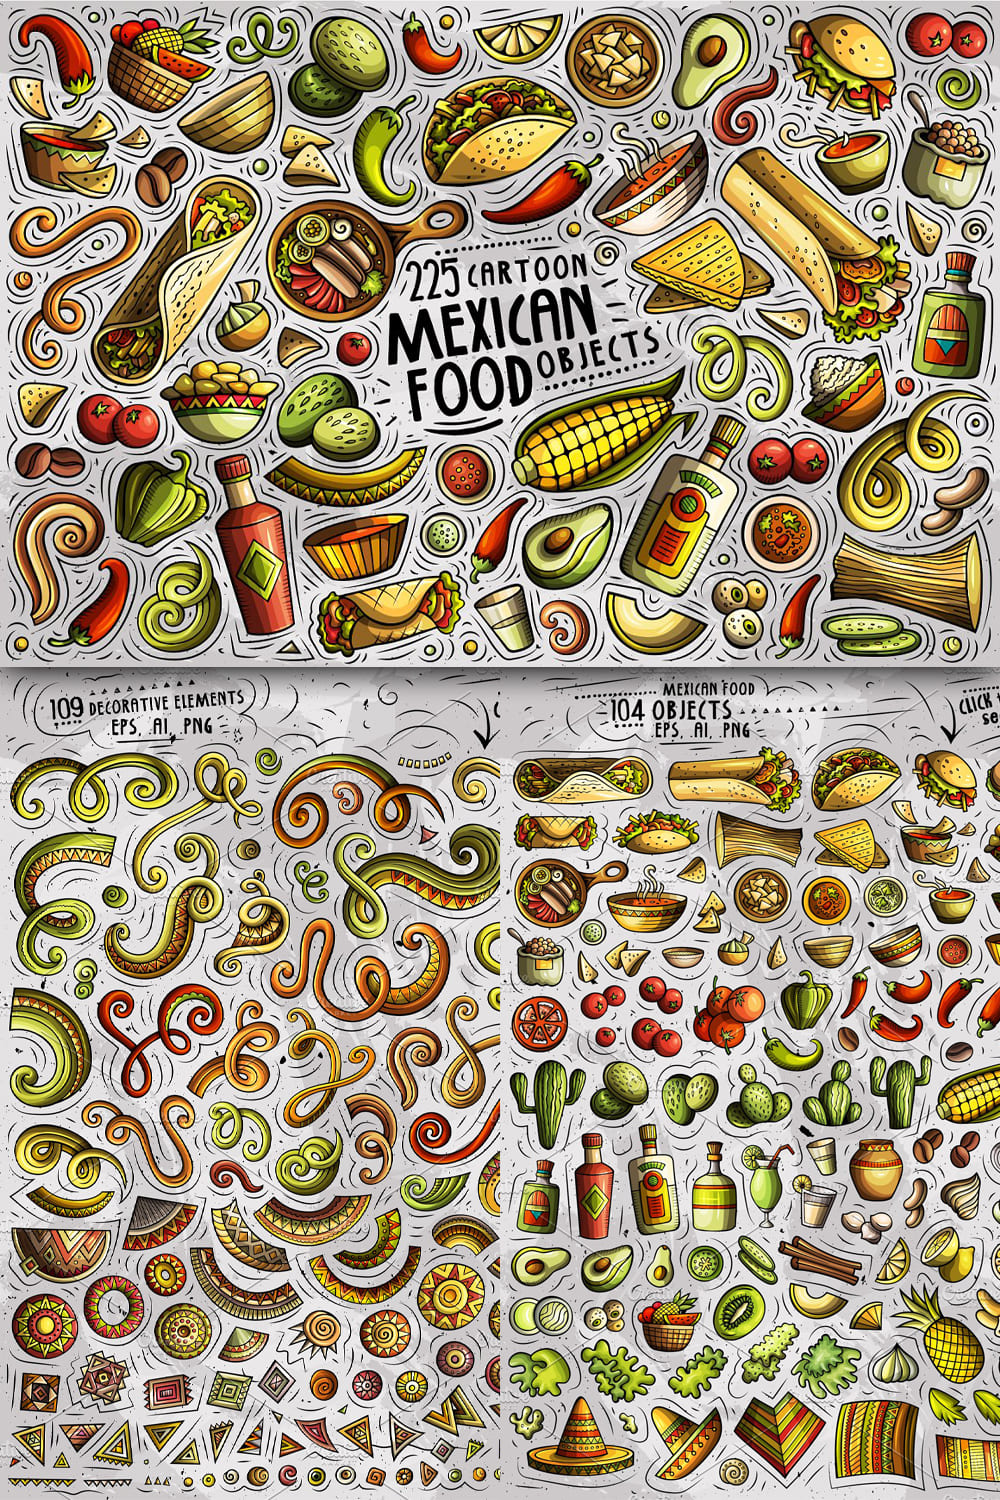 Mexican Food Cartoon Objects Set Pinterest 1000 1500.